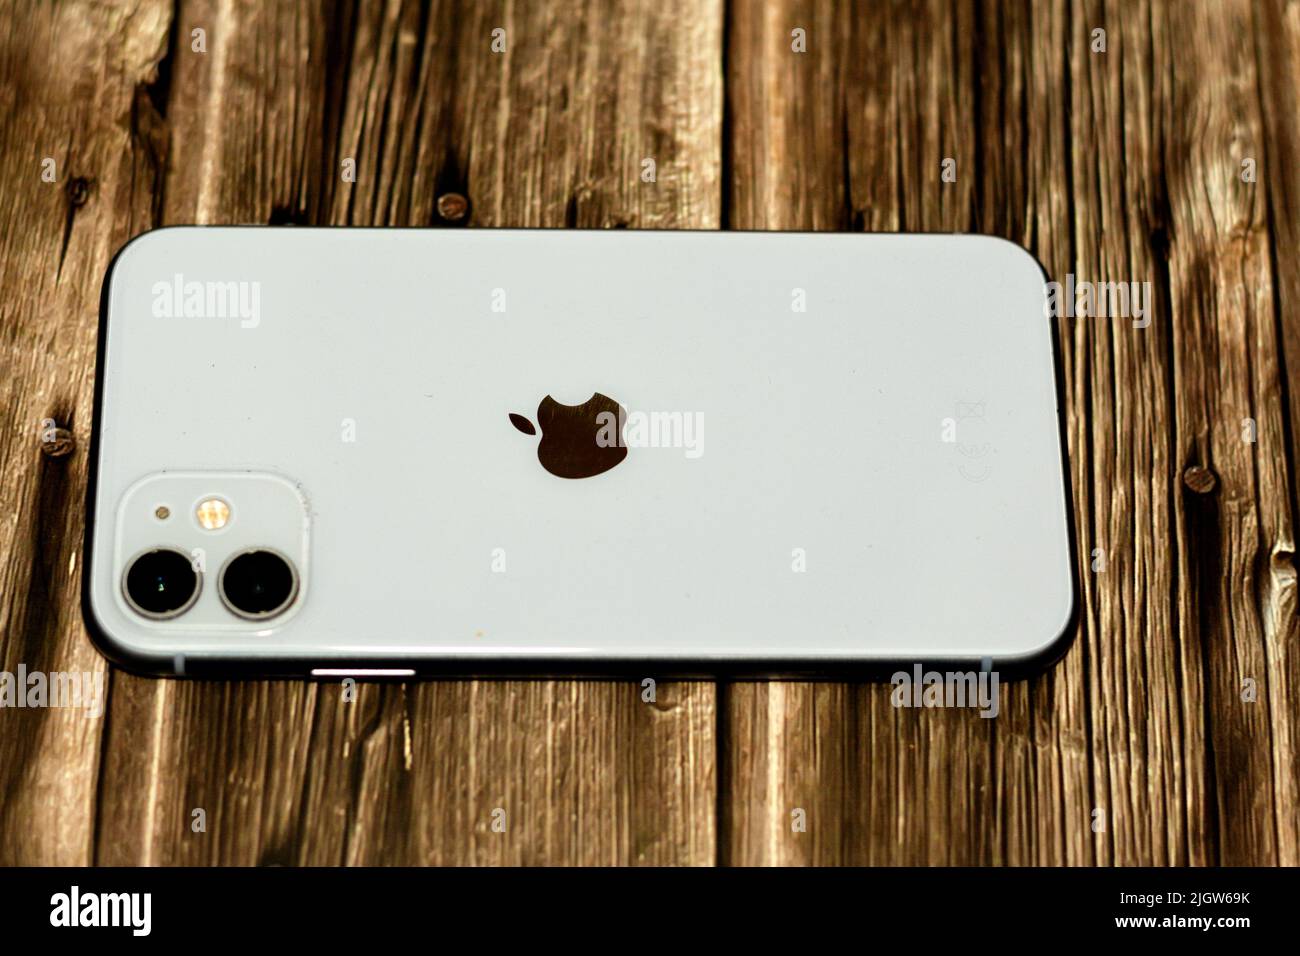 Cairo, Egypt, June 11 2022: Apple iPhone 11 with facetime, 128GB, 4GB RAM, 4G LTE, White, Single SIM and E-SIM, Face ID, 6.1-inch Liquid Retina HD Hig Stock Photo